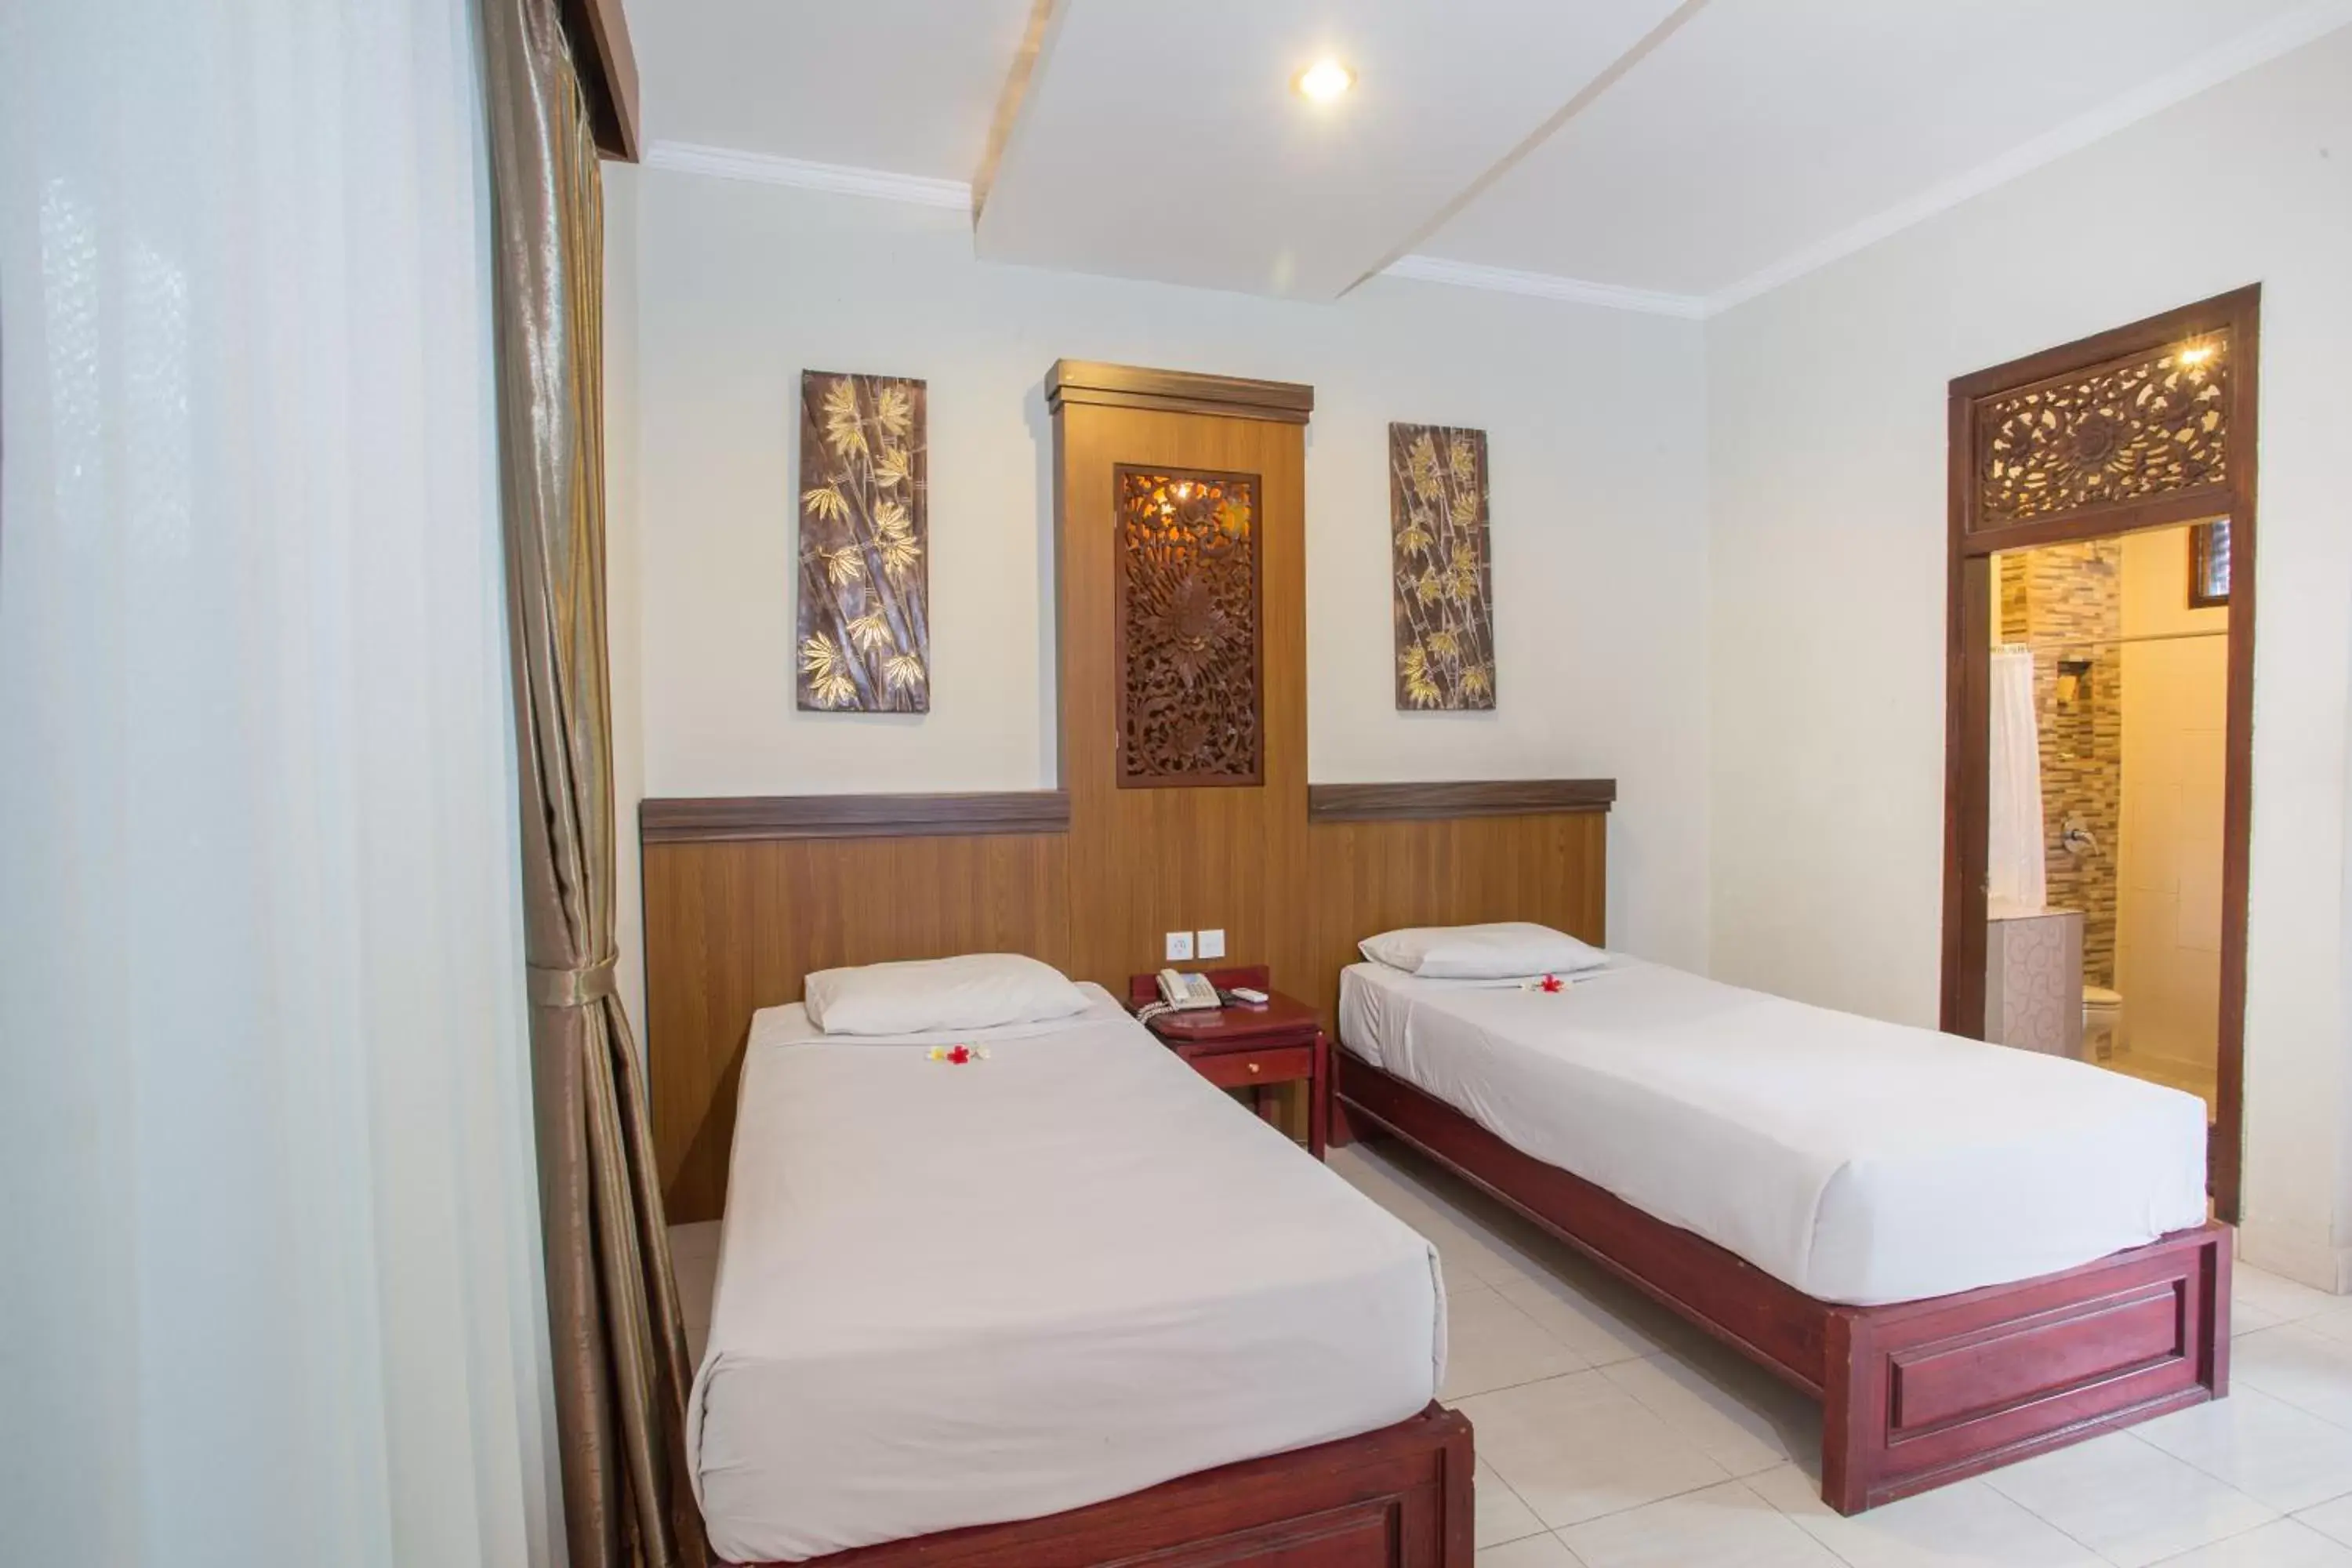 Bedroom in Sinar Bali Hotel